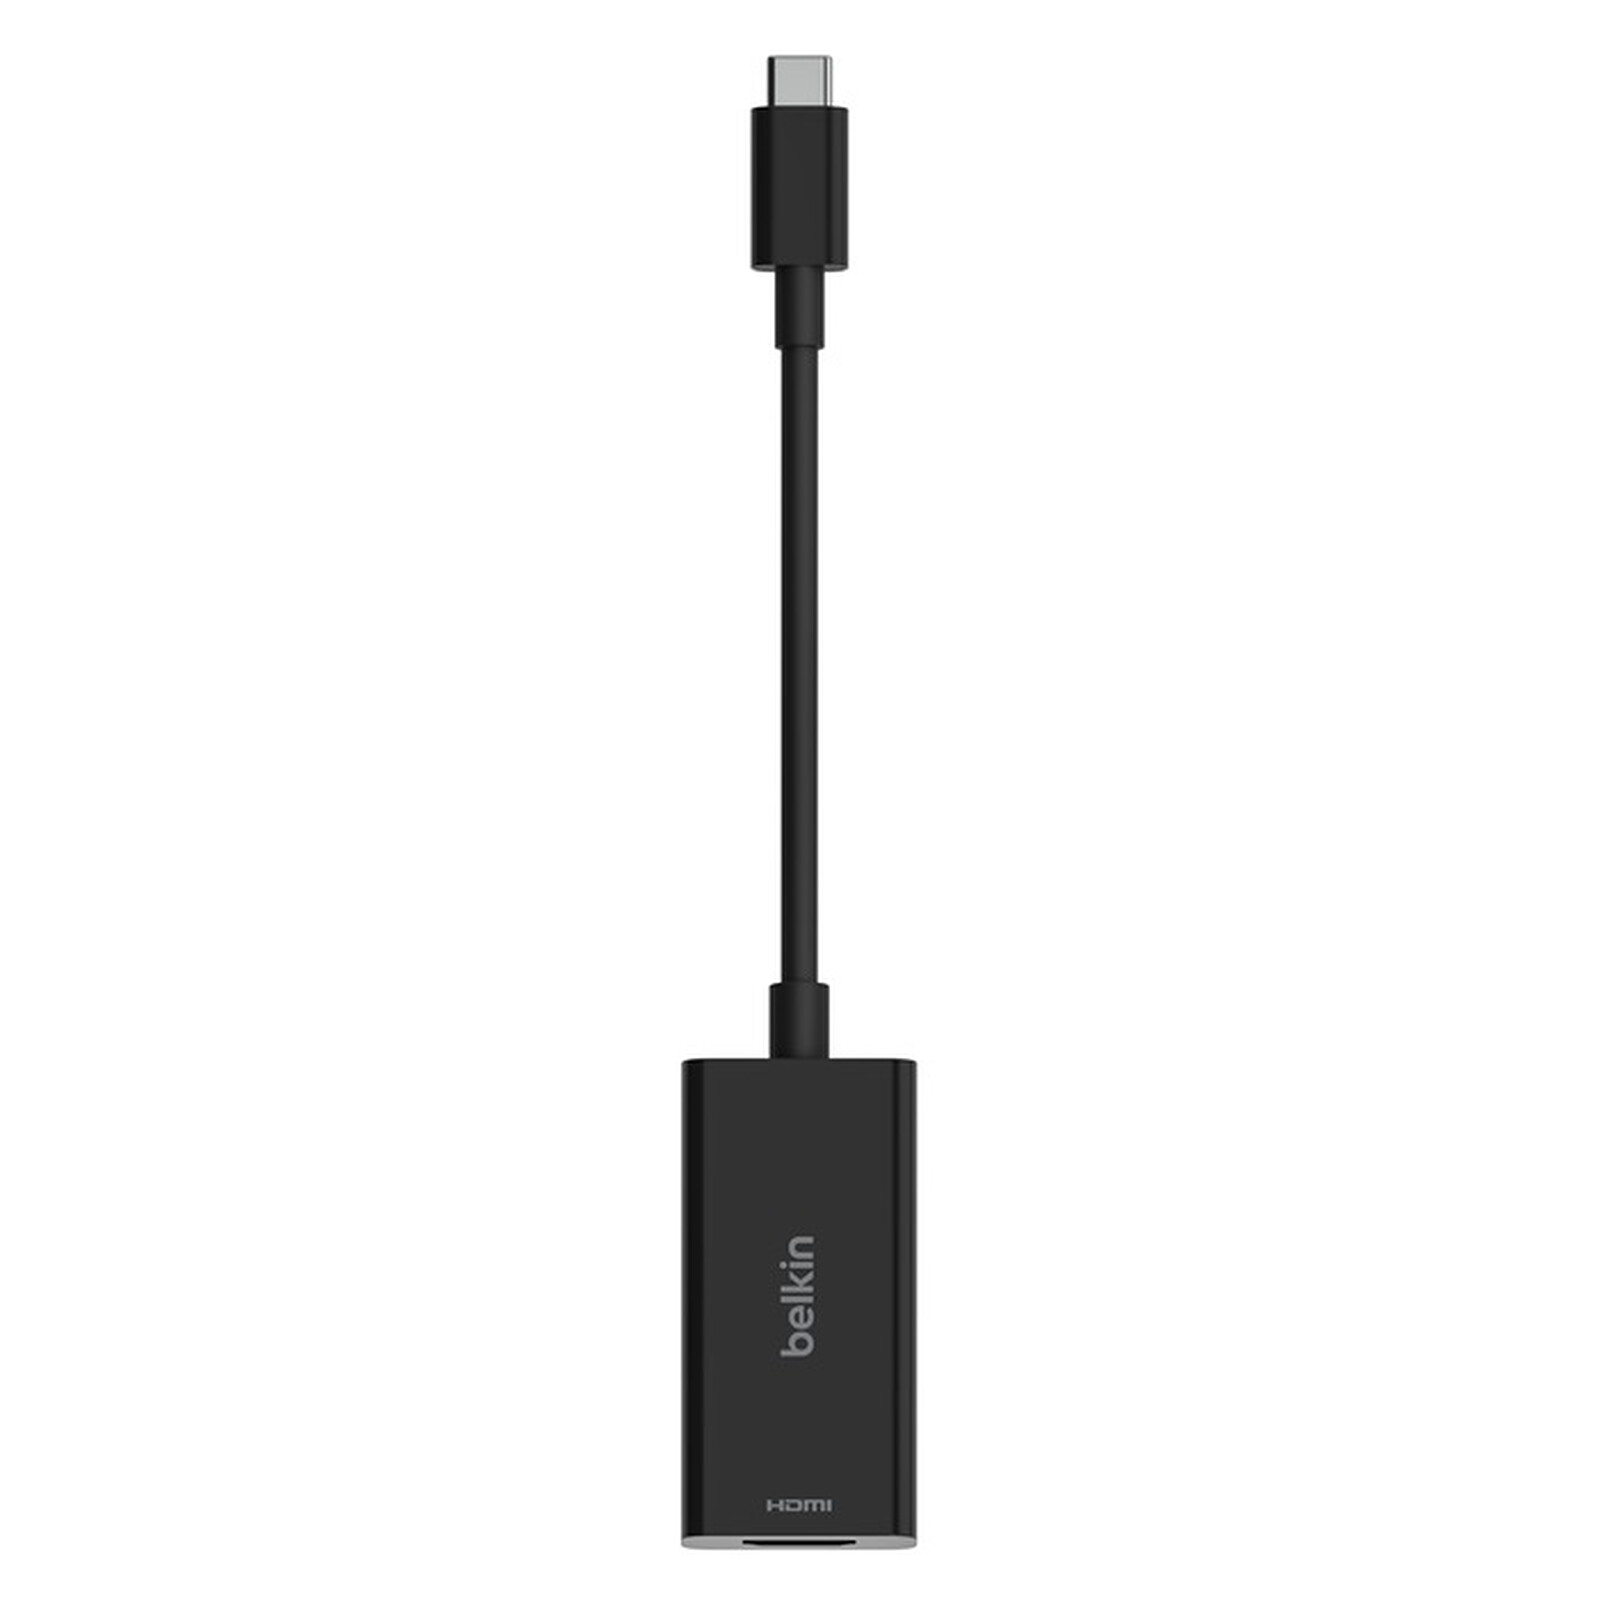 BELKIN USB Type-C to HDMI Adapter